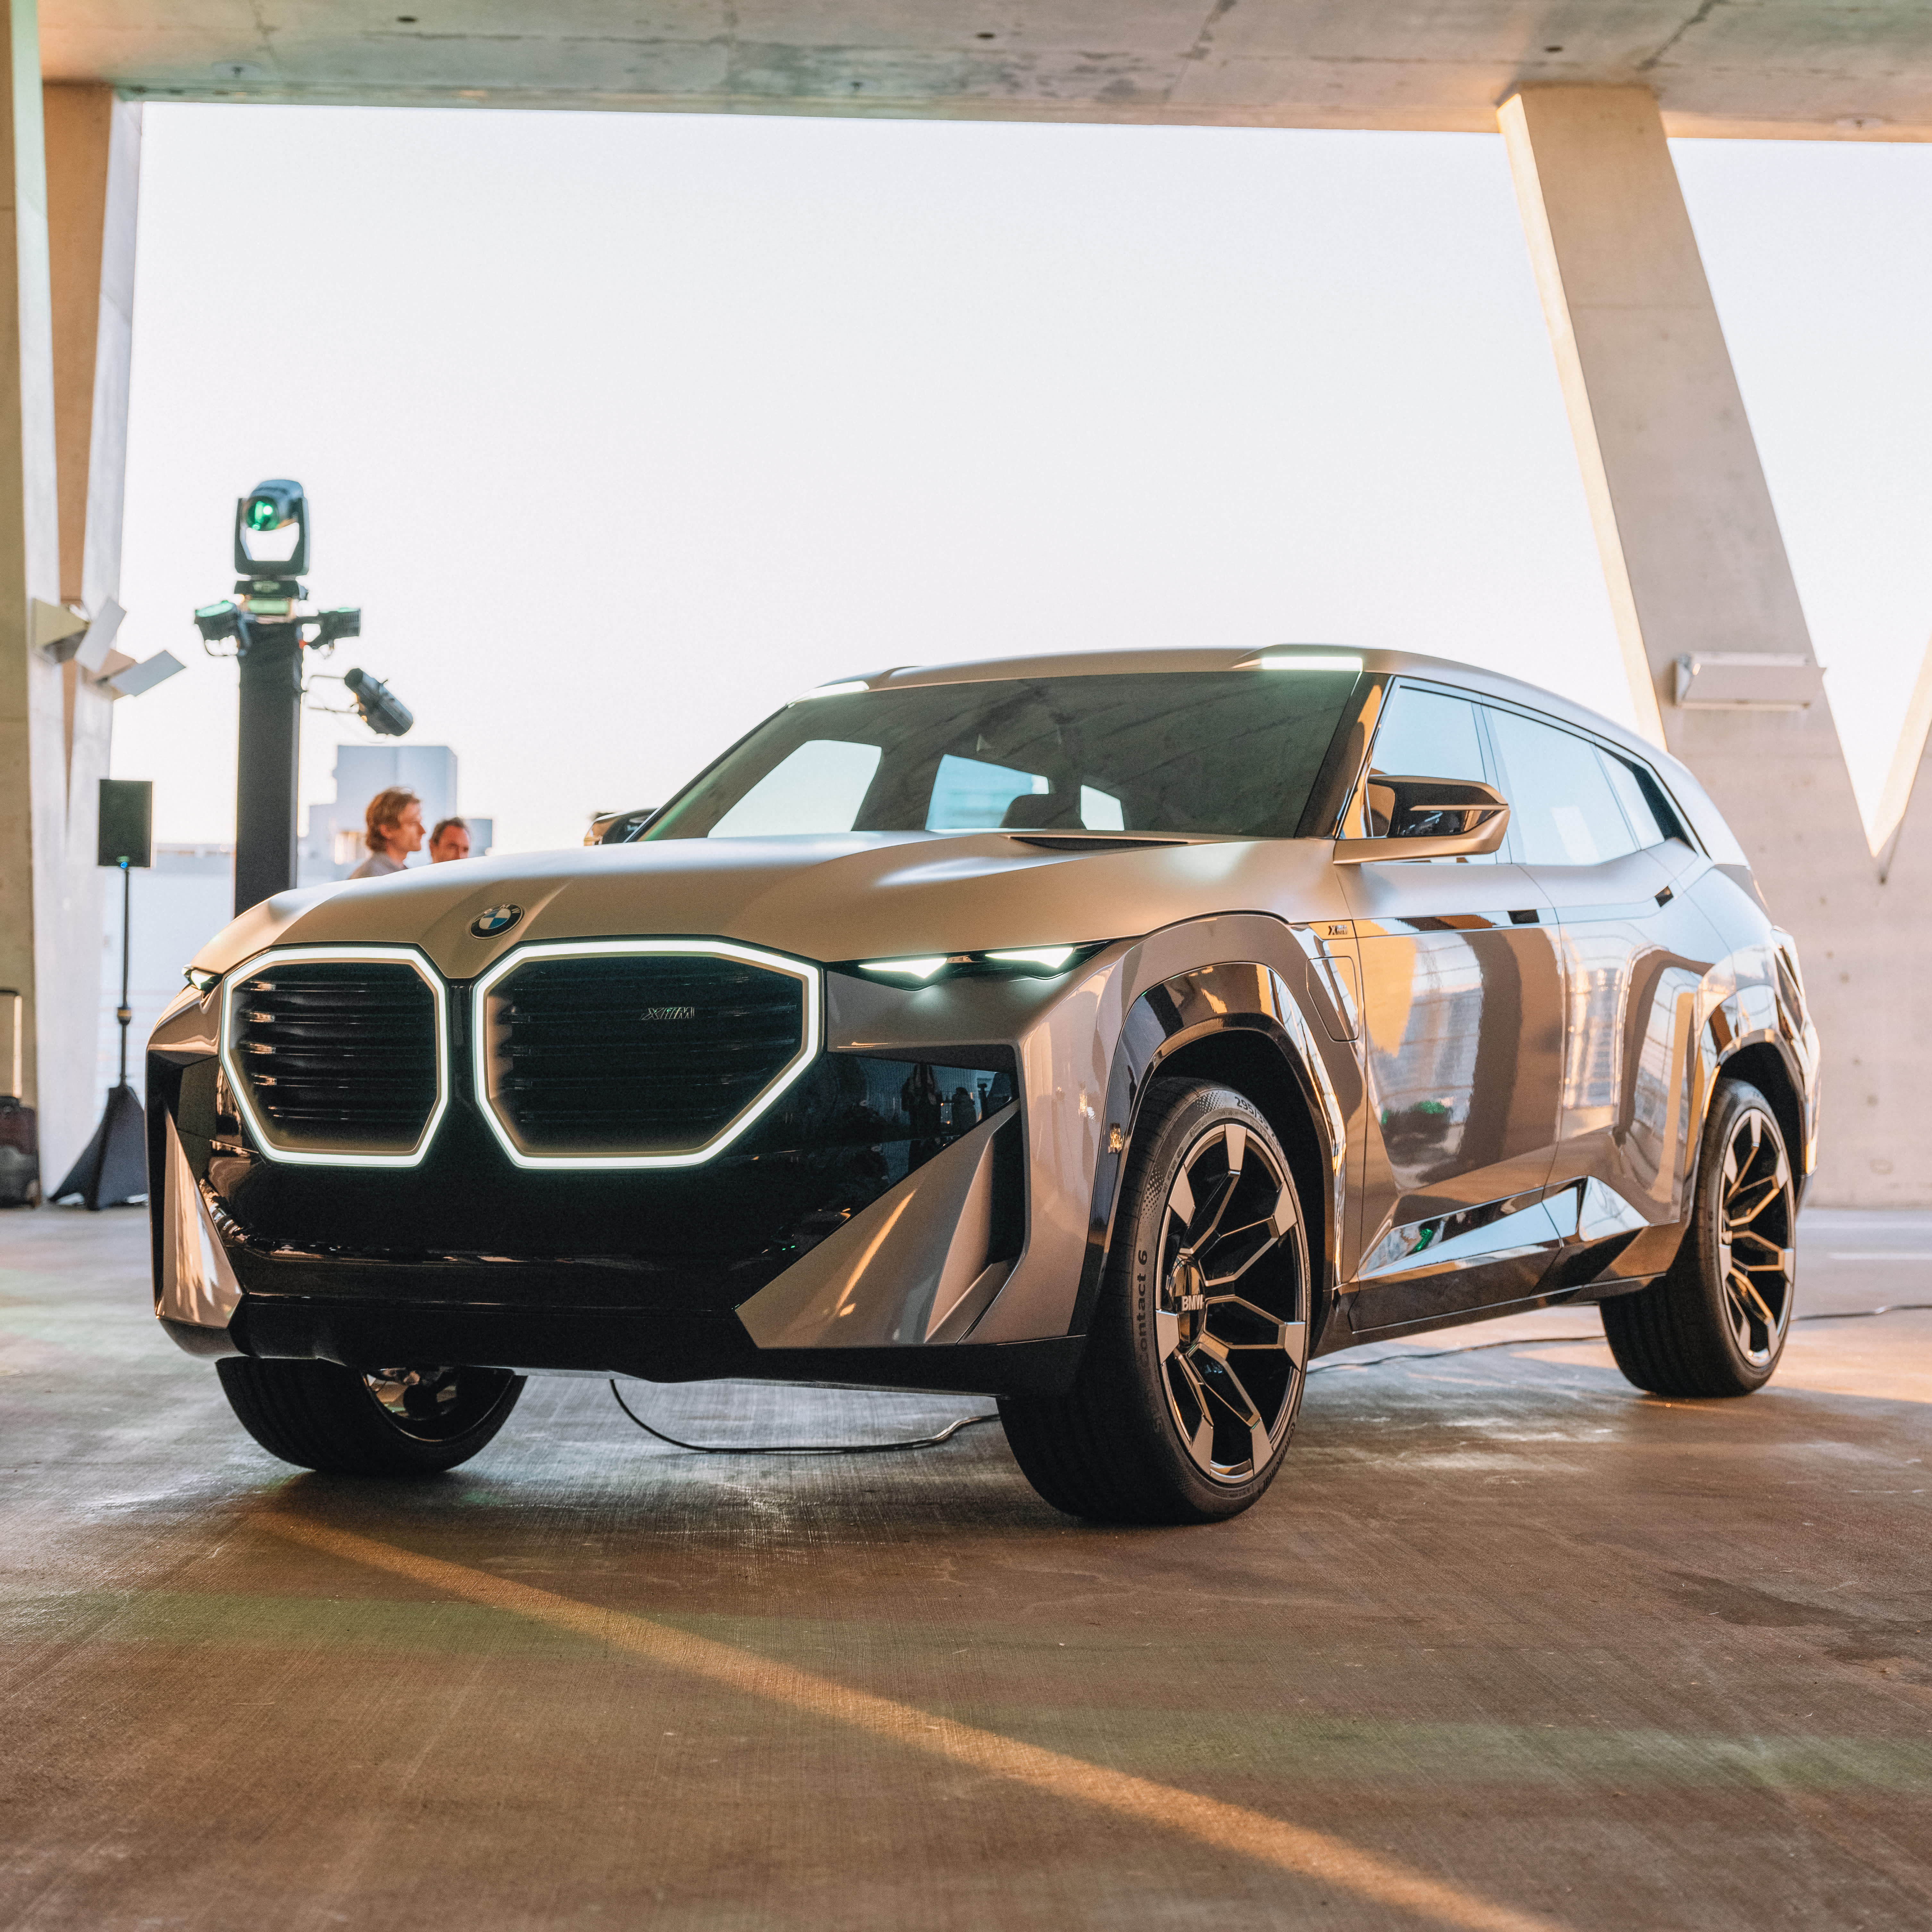 BMW unveils high-performance XM hybrid electric concept vehicle ahead of U.S. production Auto Recent